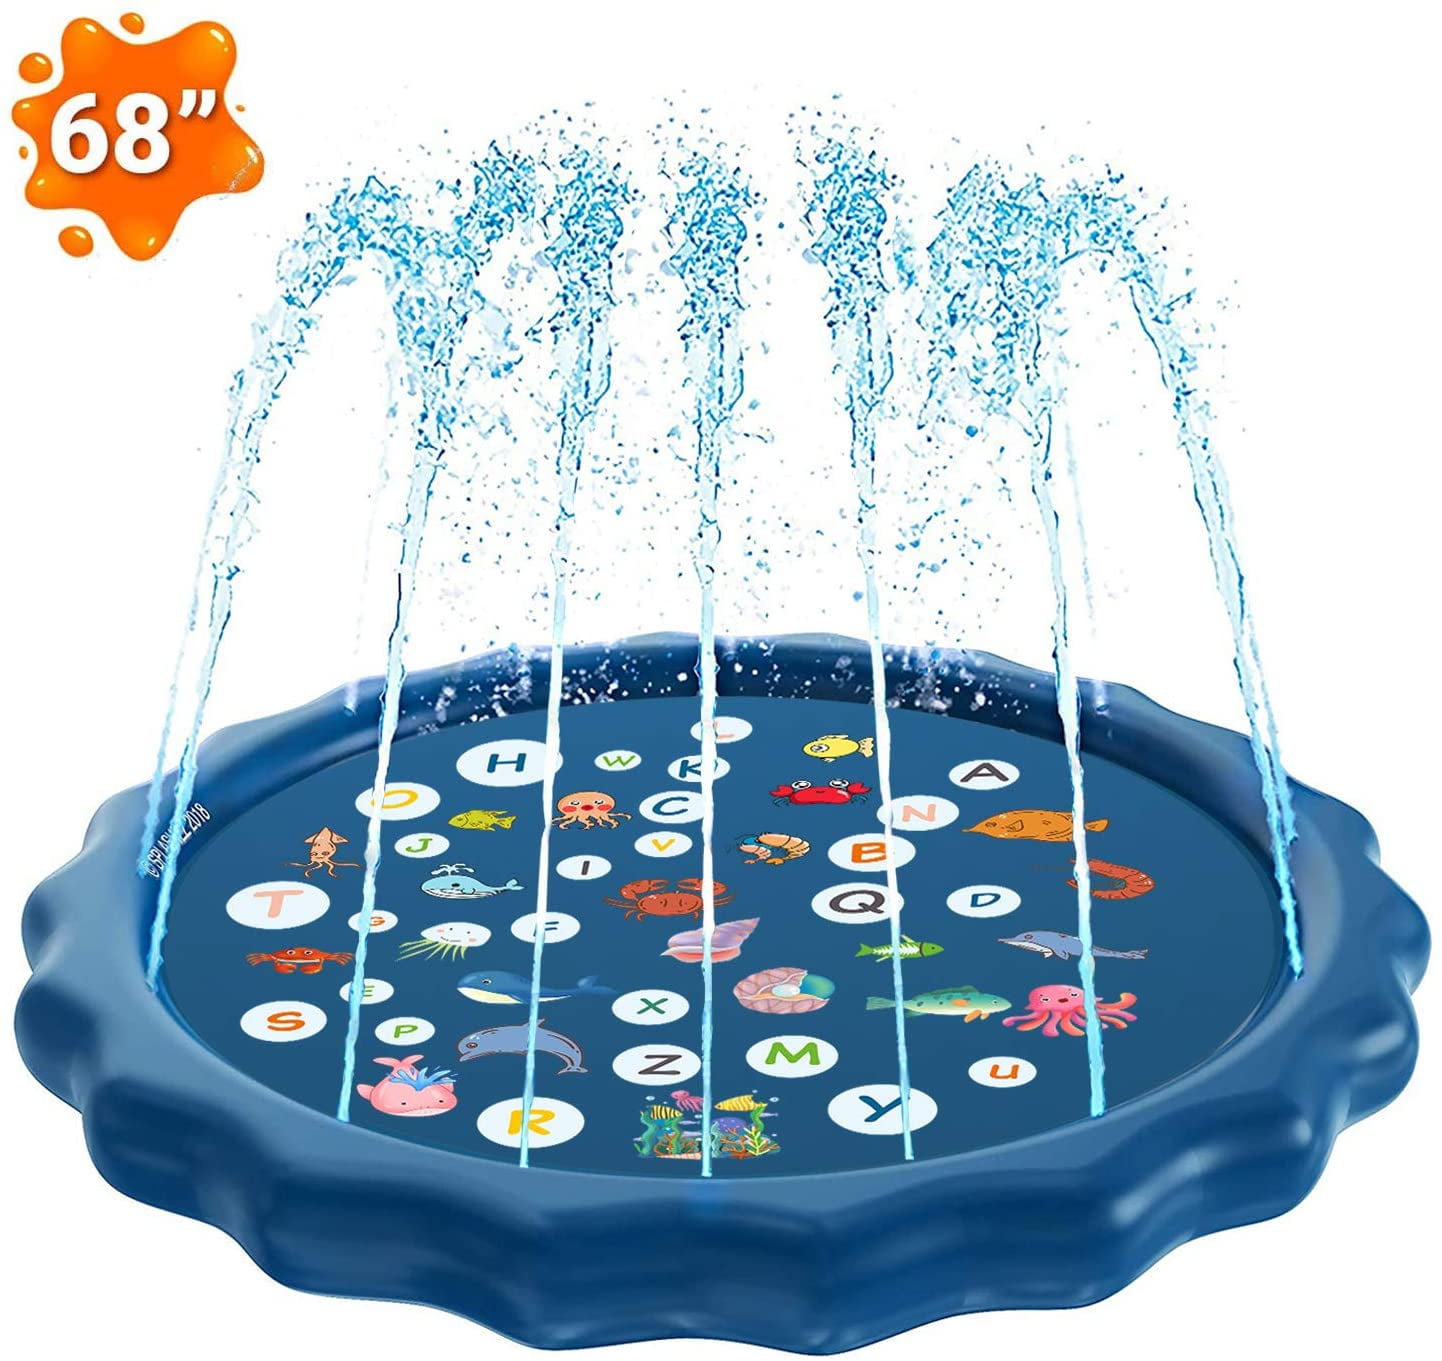 TYUXINSD Lovely Splash Pad Sprinkler Play MaT Summer Water Sprinkler Pool,Inflatable Portable 